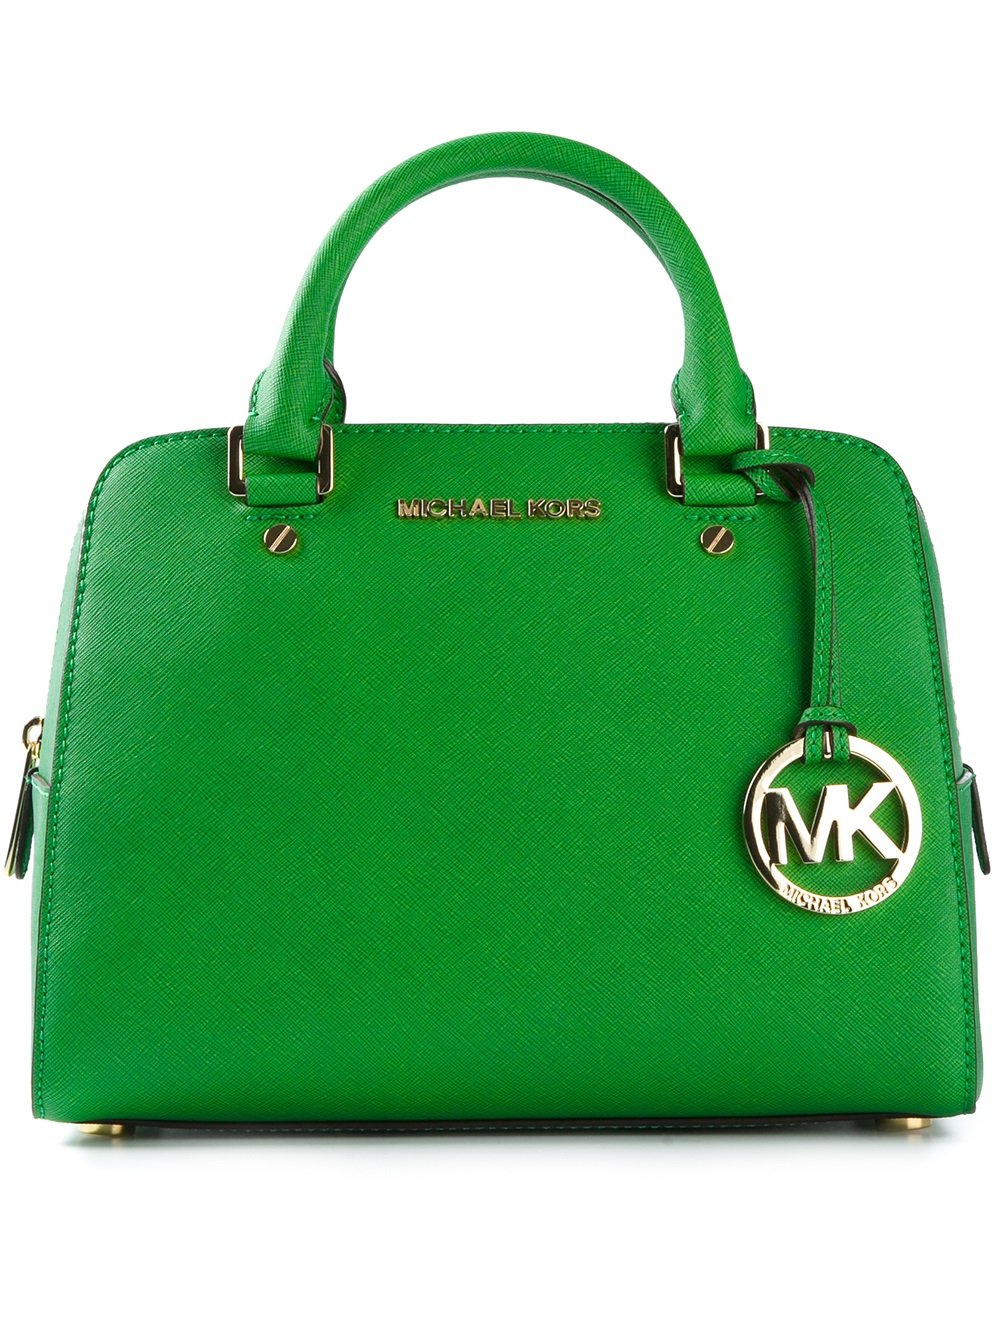 Women's Green Handbags, Bags & Purses